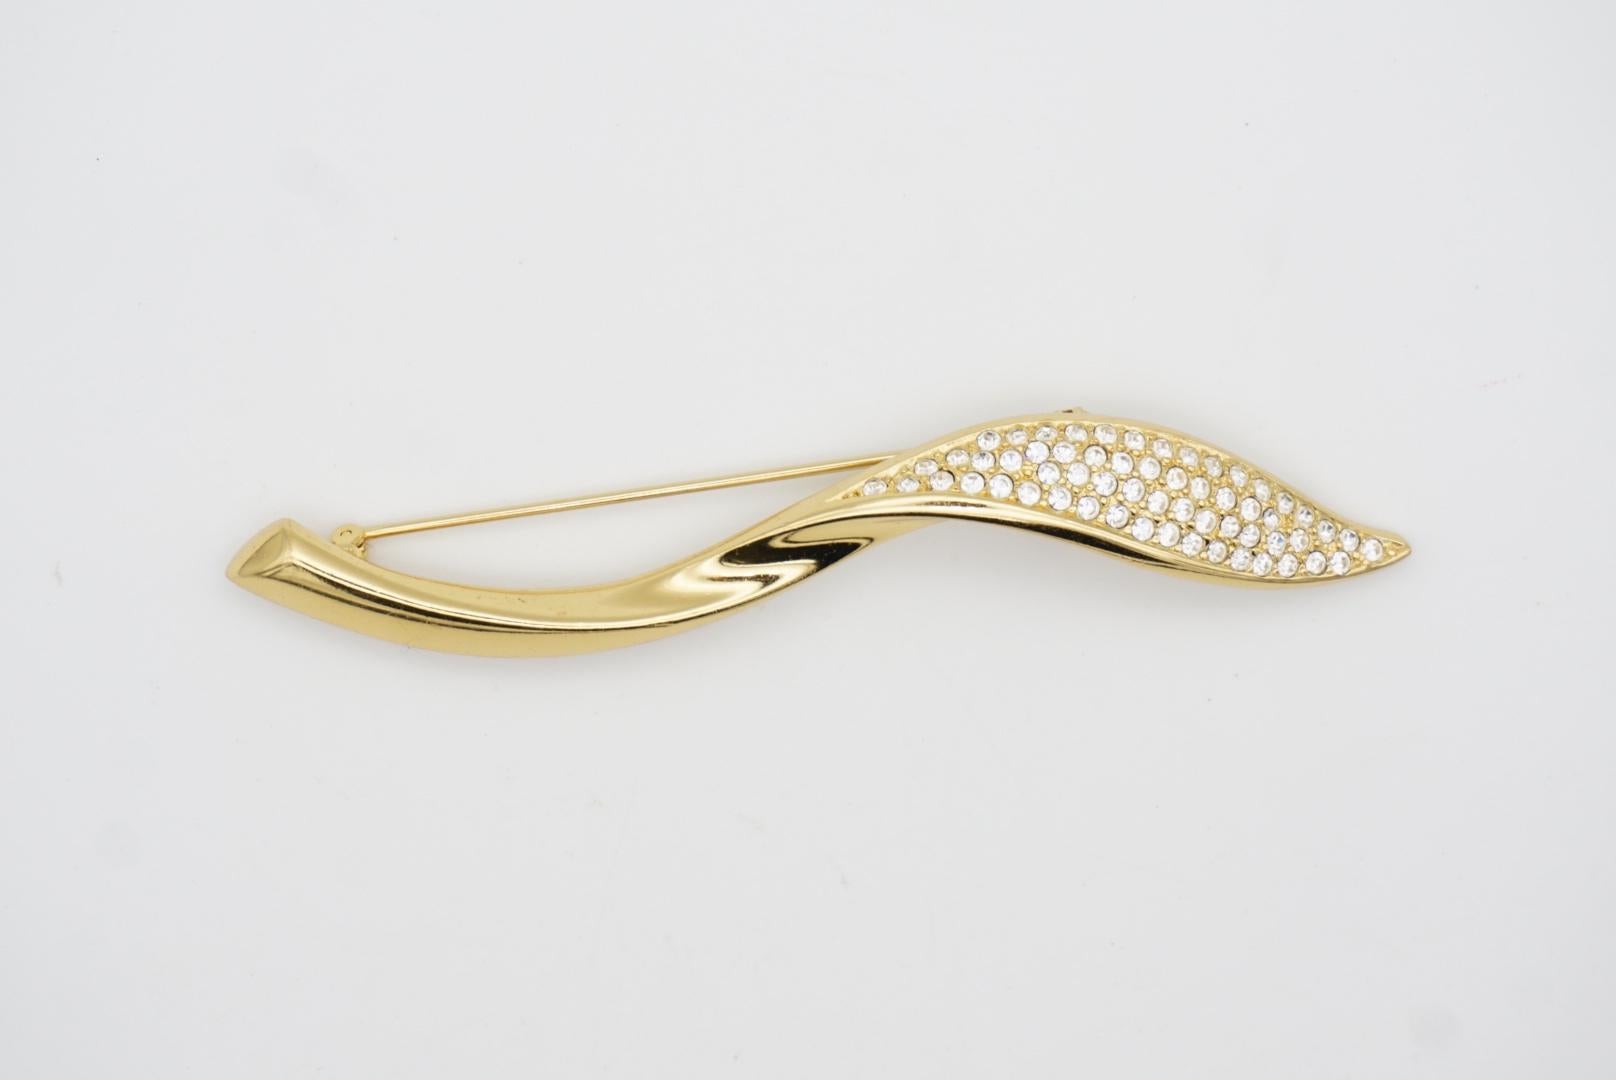 Christian Dior 1970s Vintage Large Long Swirl Leaf Flame Crystals Gold Brooch For Sale 3